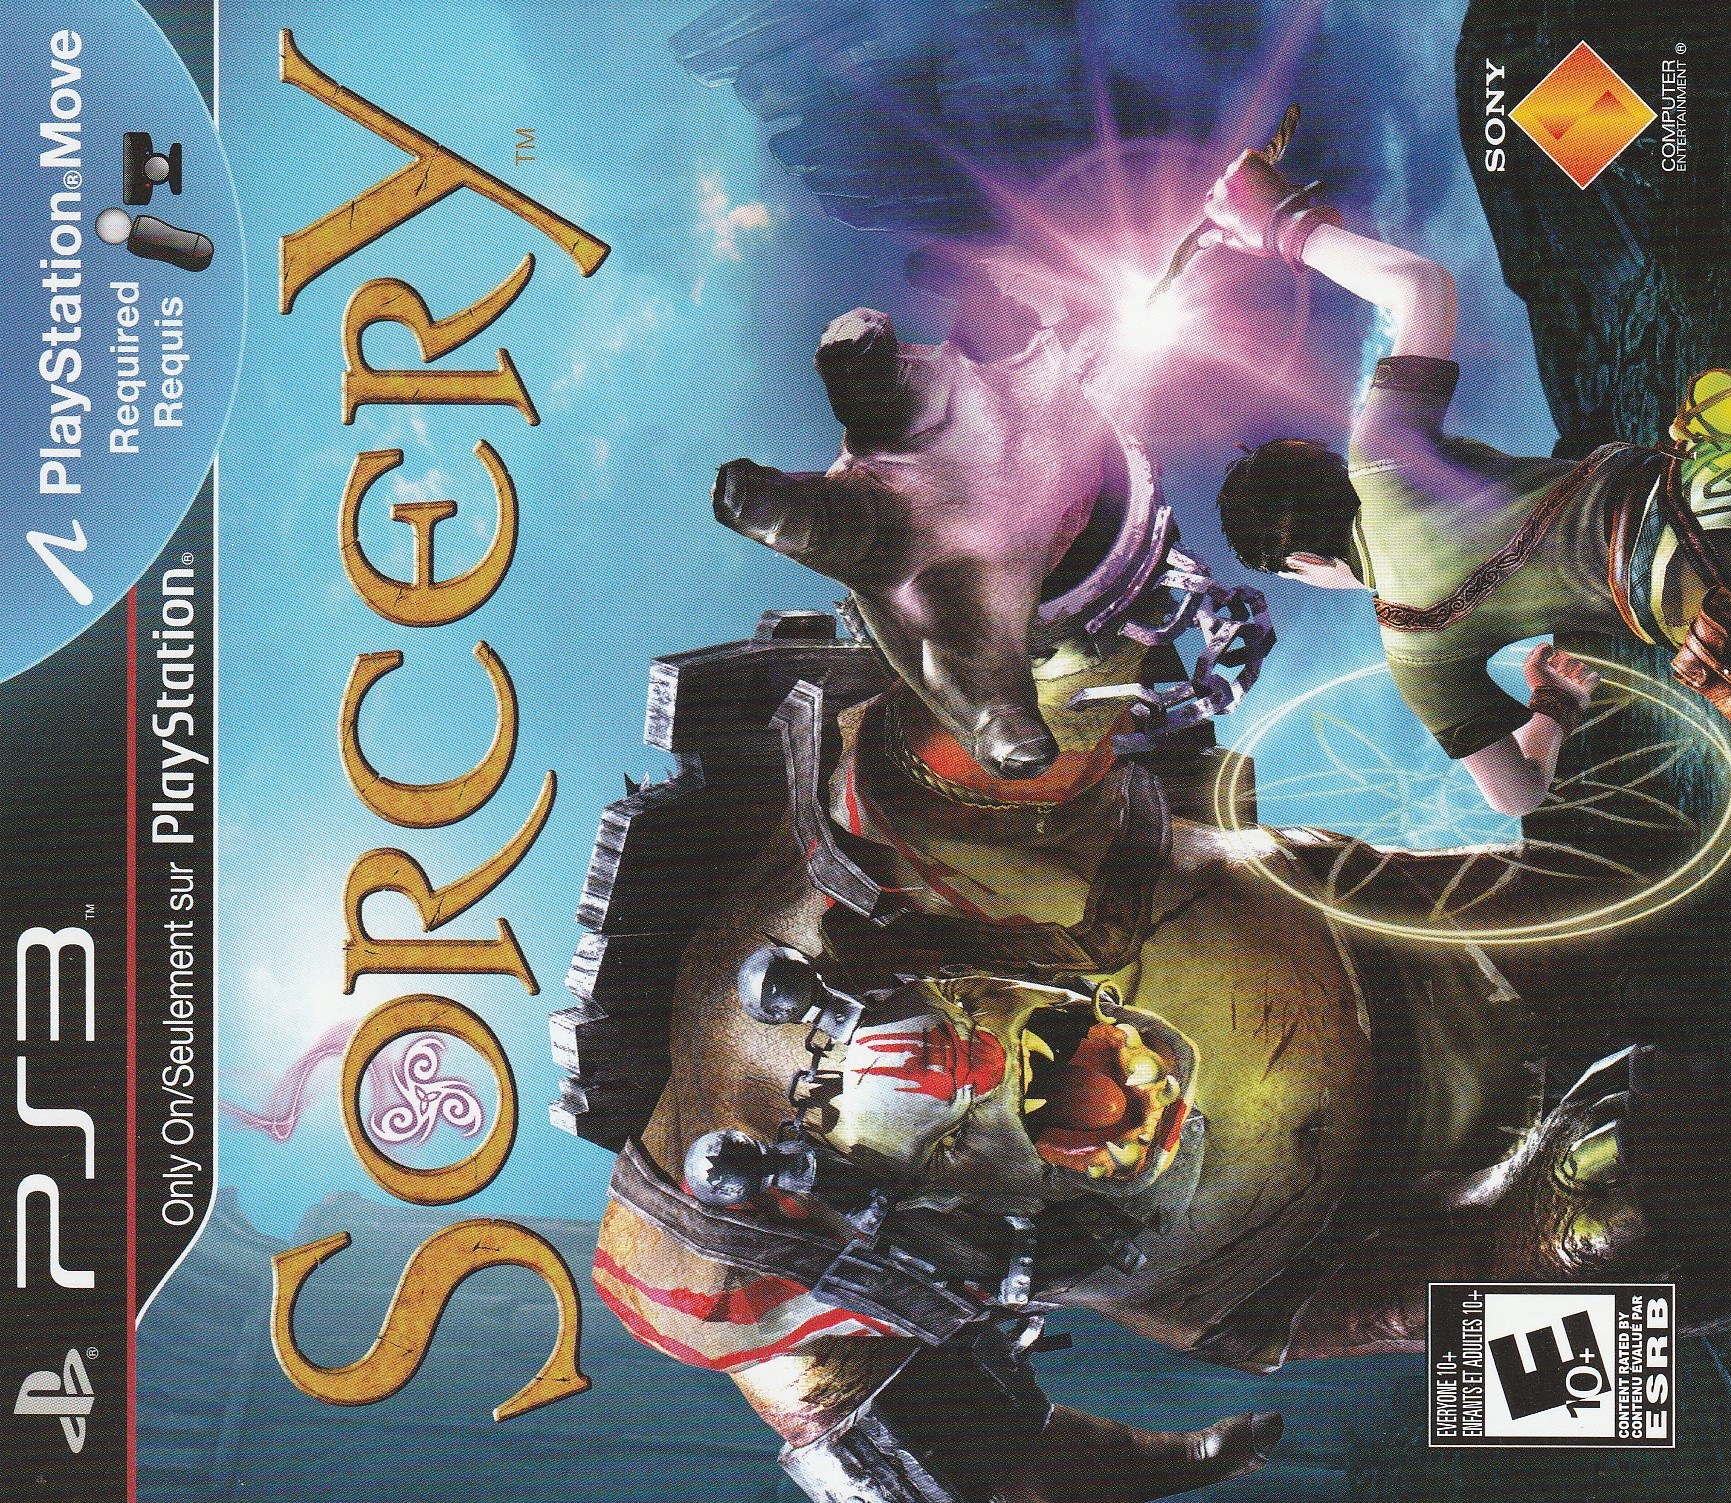 'Sorcery'